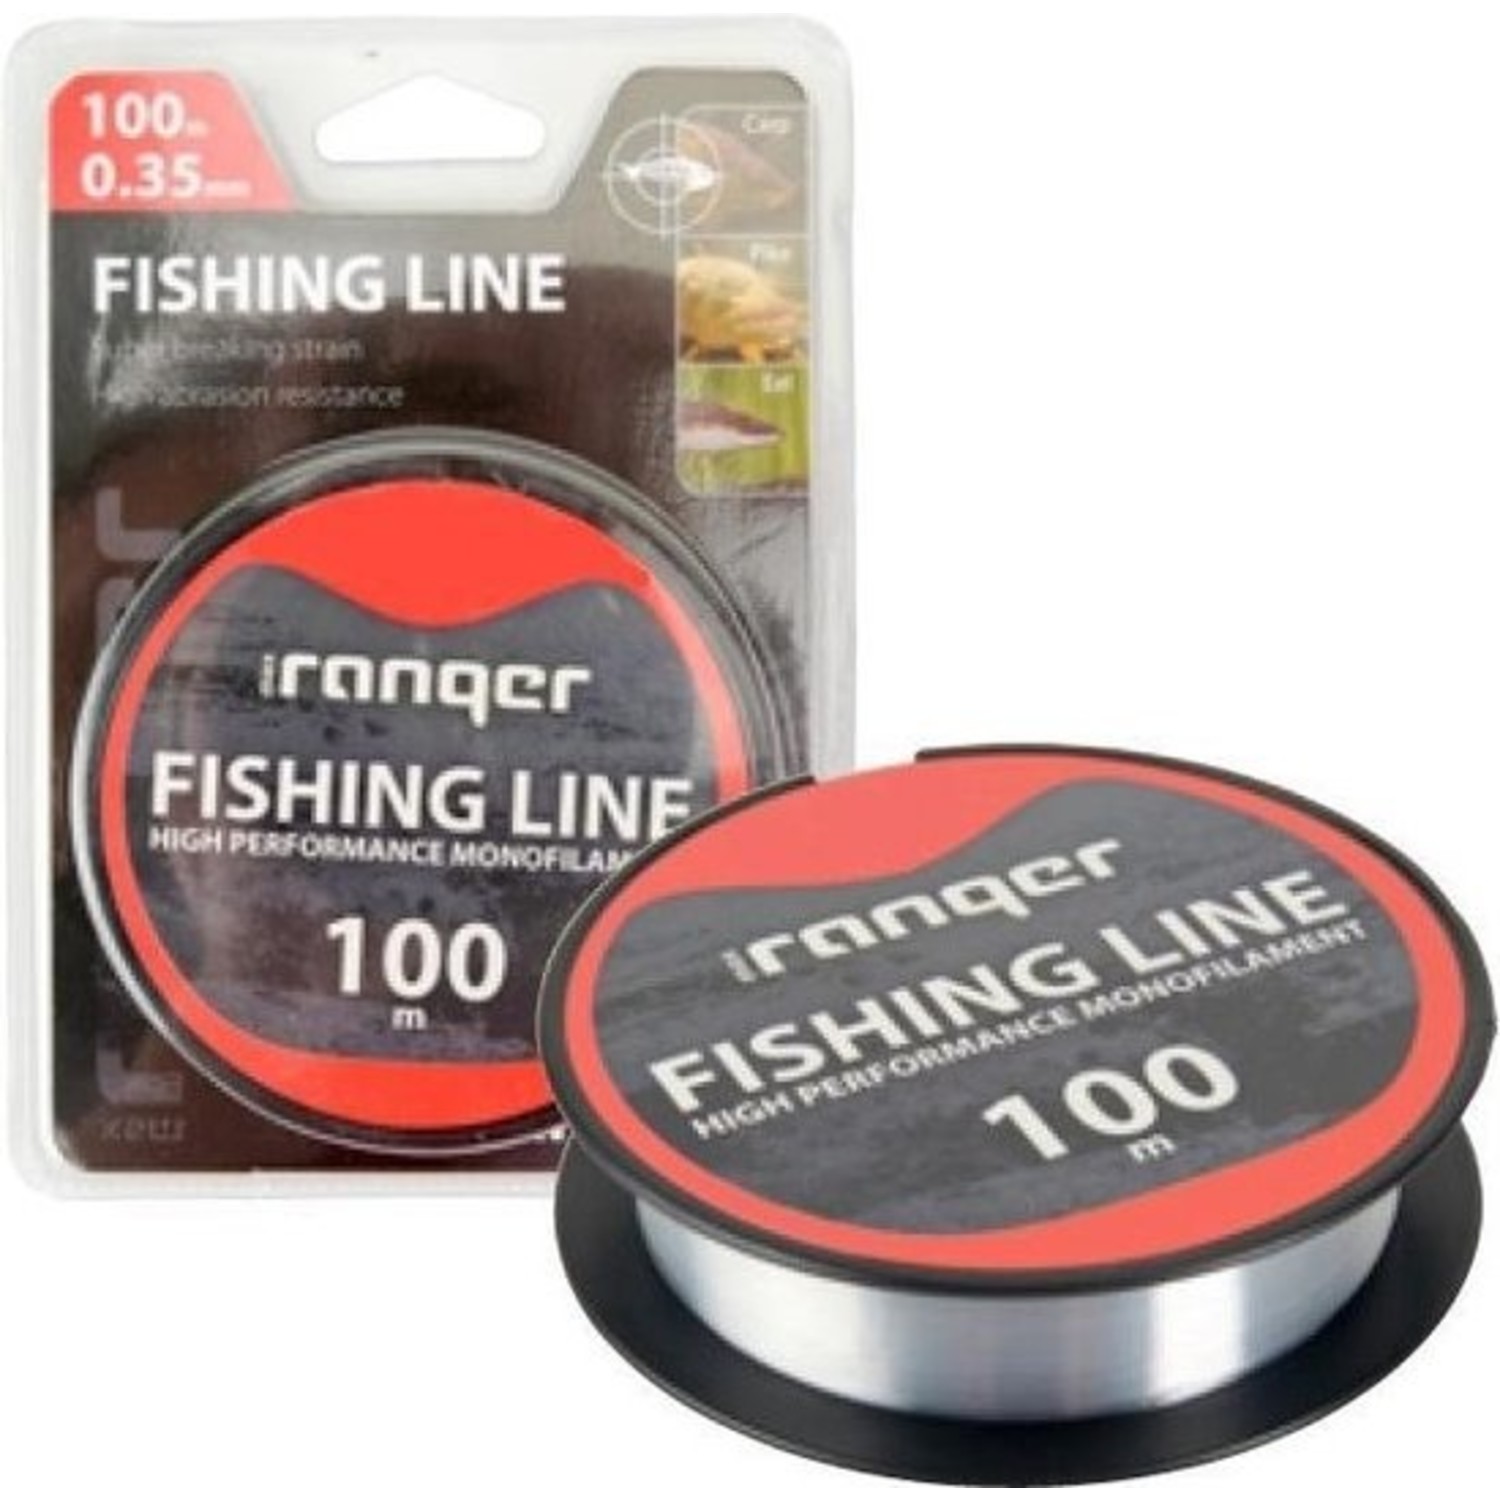 https://cdn.webshopapp.com/shops/281257/files/422056597/1500x1500x2/max-ranger-fishing-line-fishing-line-clear-fishing.jpg